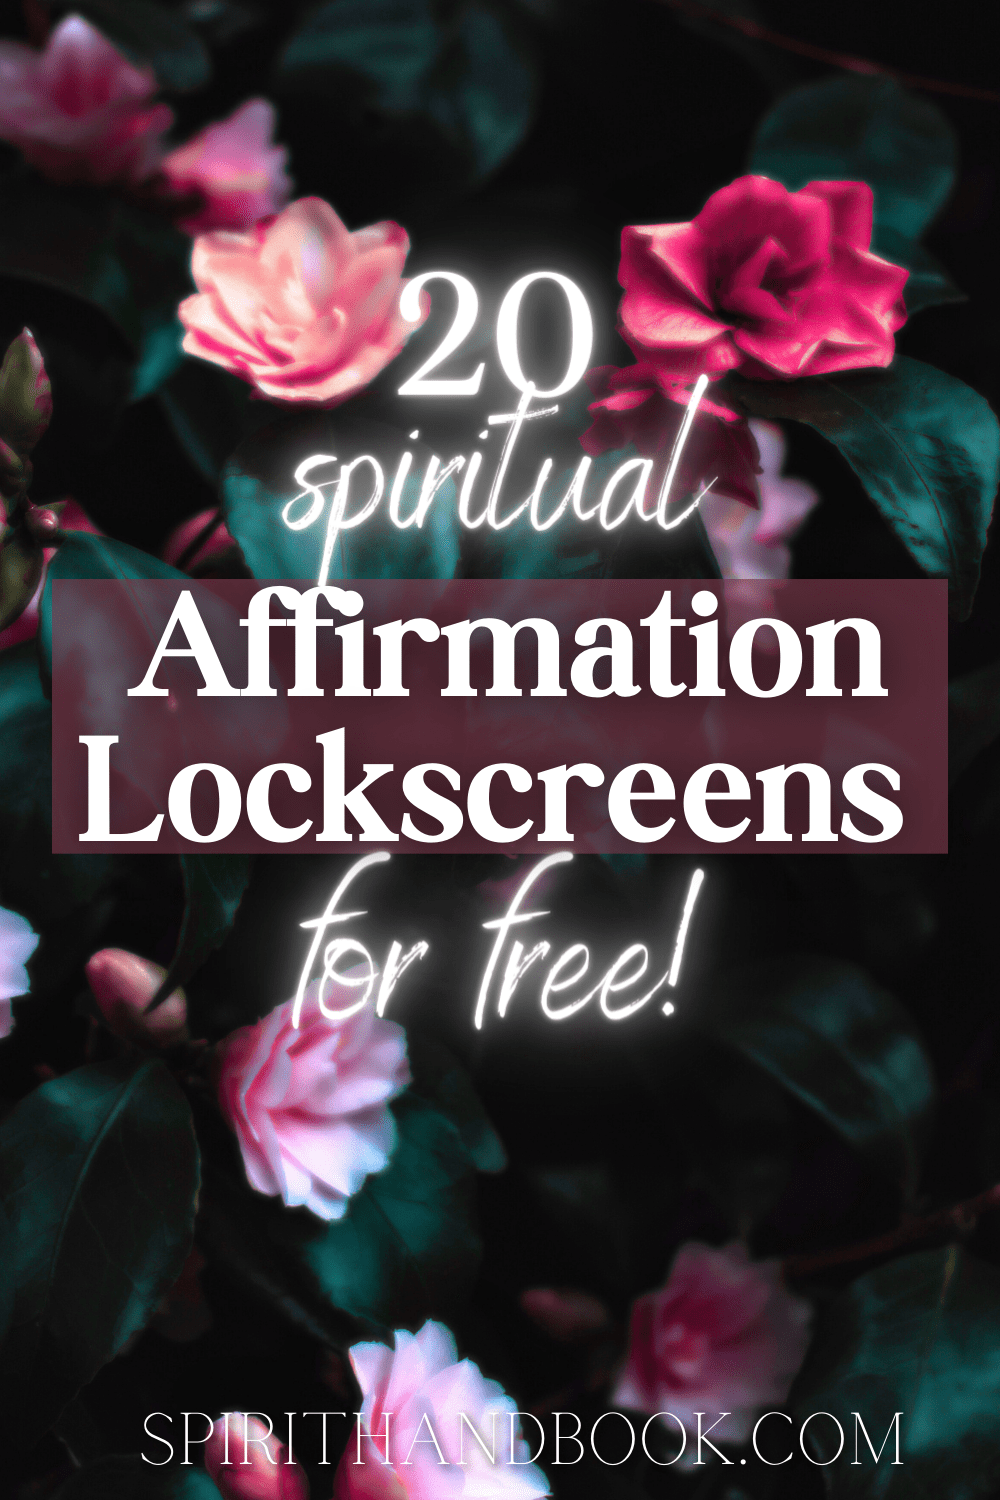 20 beautiful Affirmation Lockscreens for Your Smartphone!